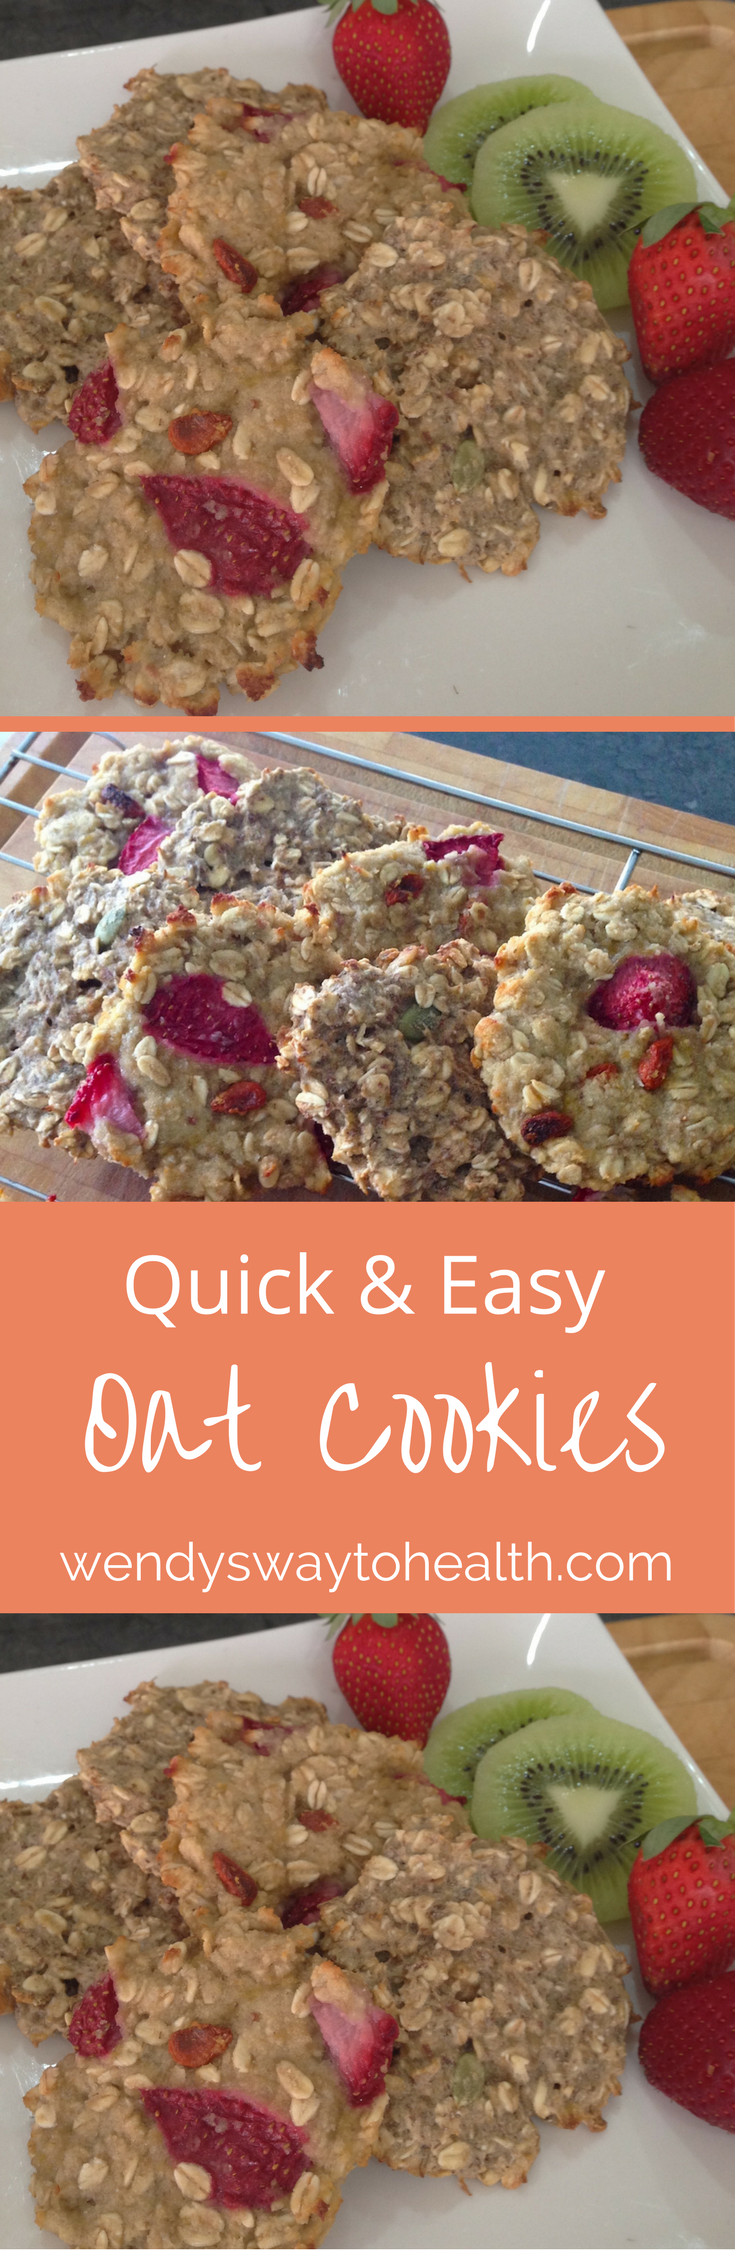 Quick, easy & yummy 2 ingredient oat cookies